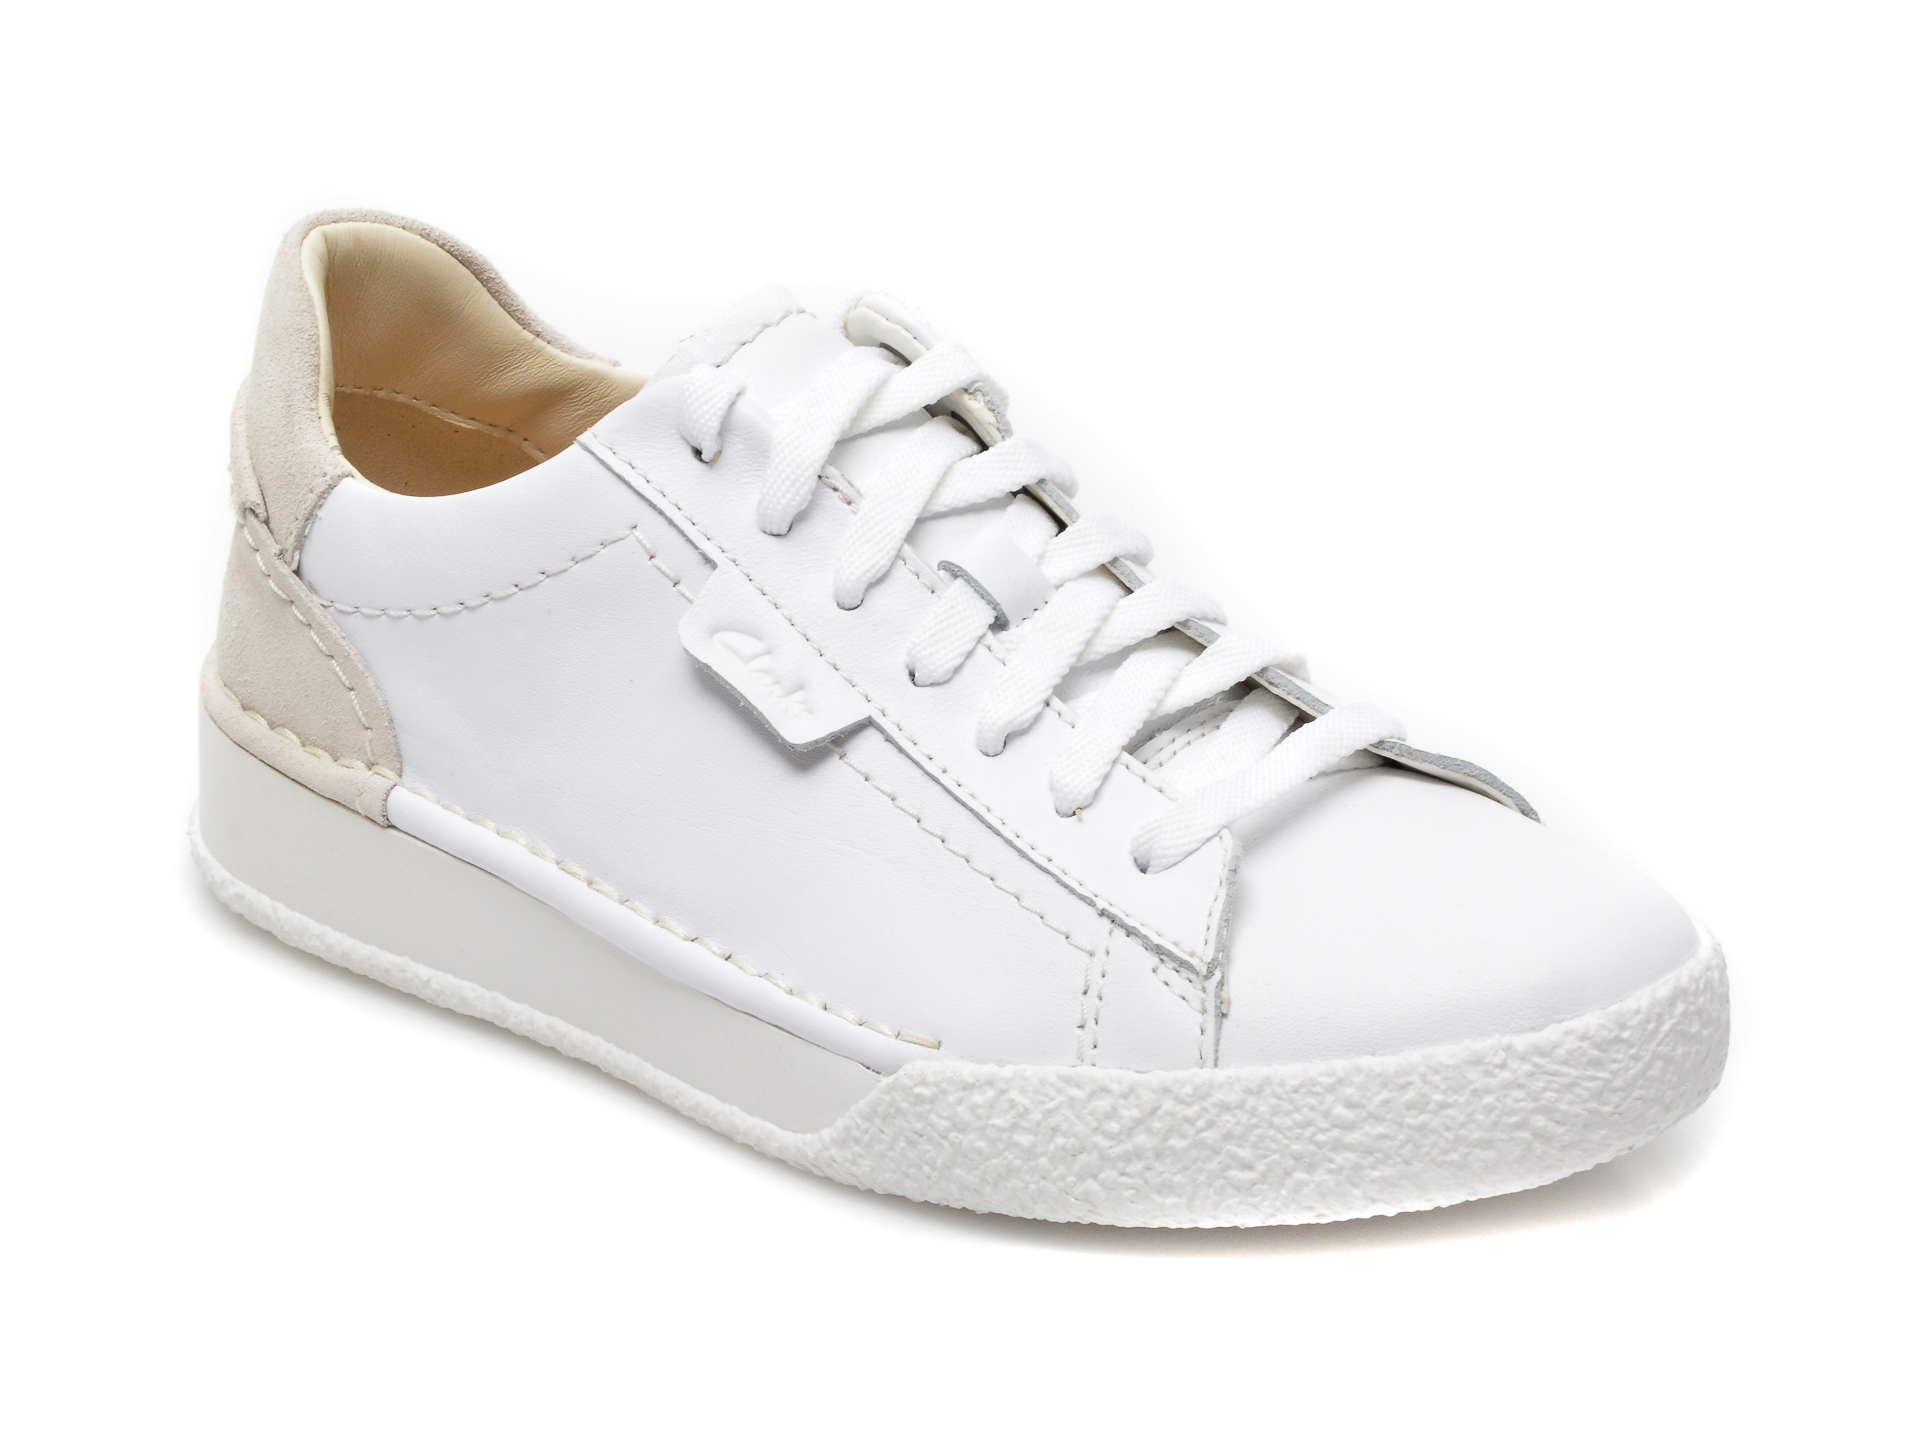 Pantofi sport CLARKS albi, Sift Lace, din material textil si piele naturala